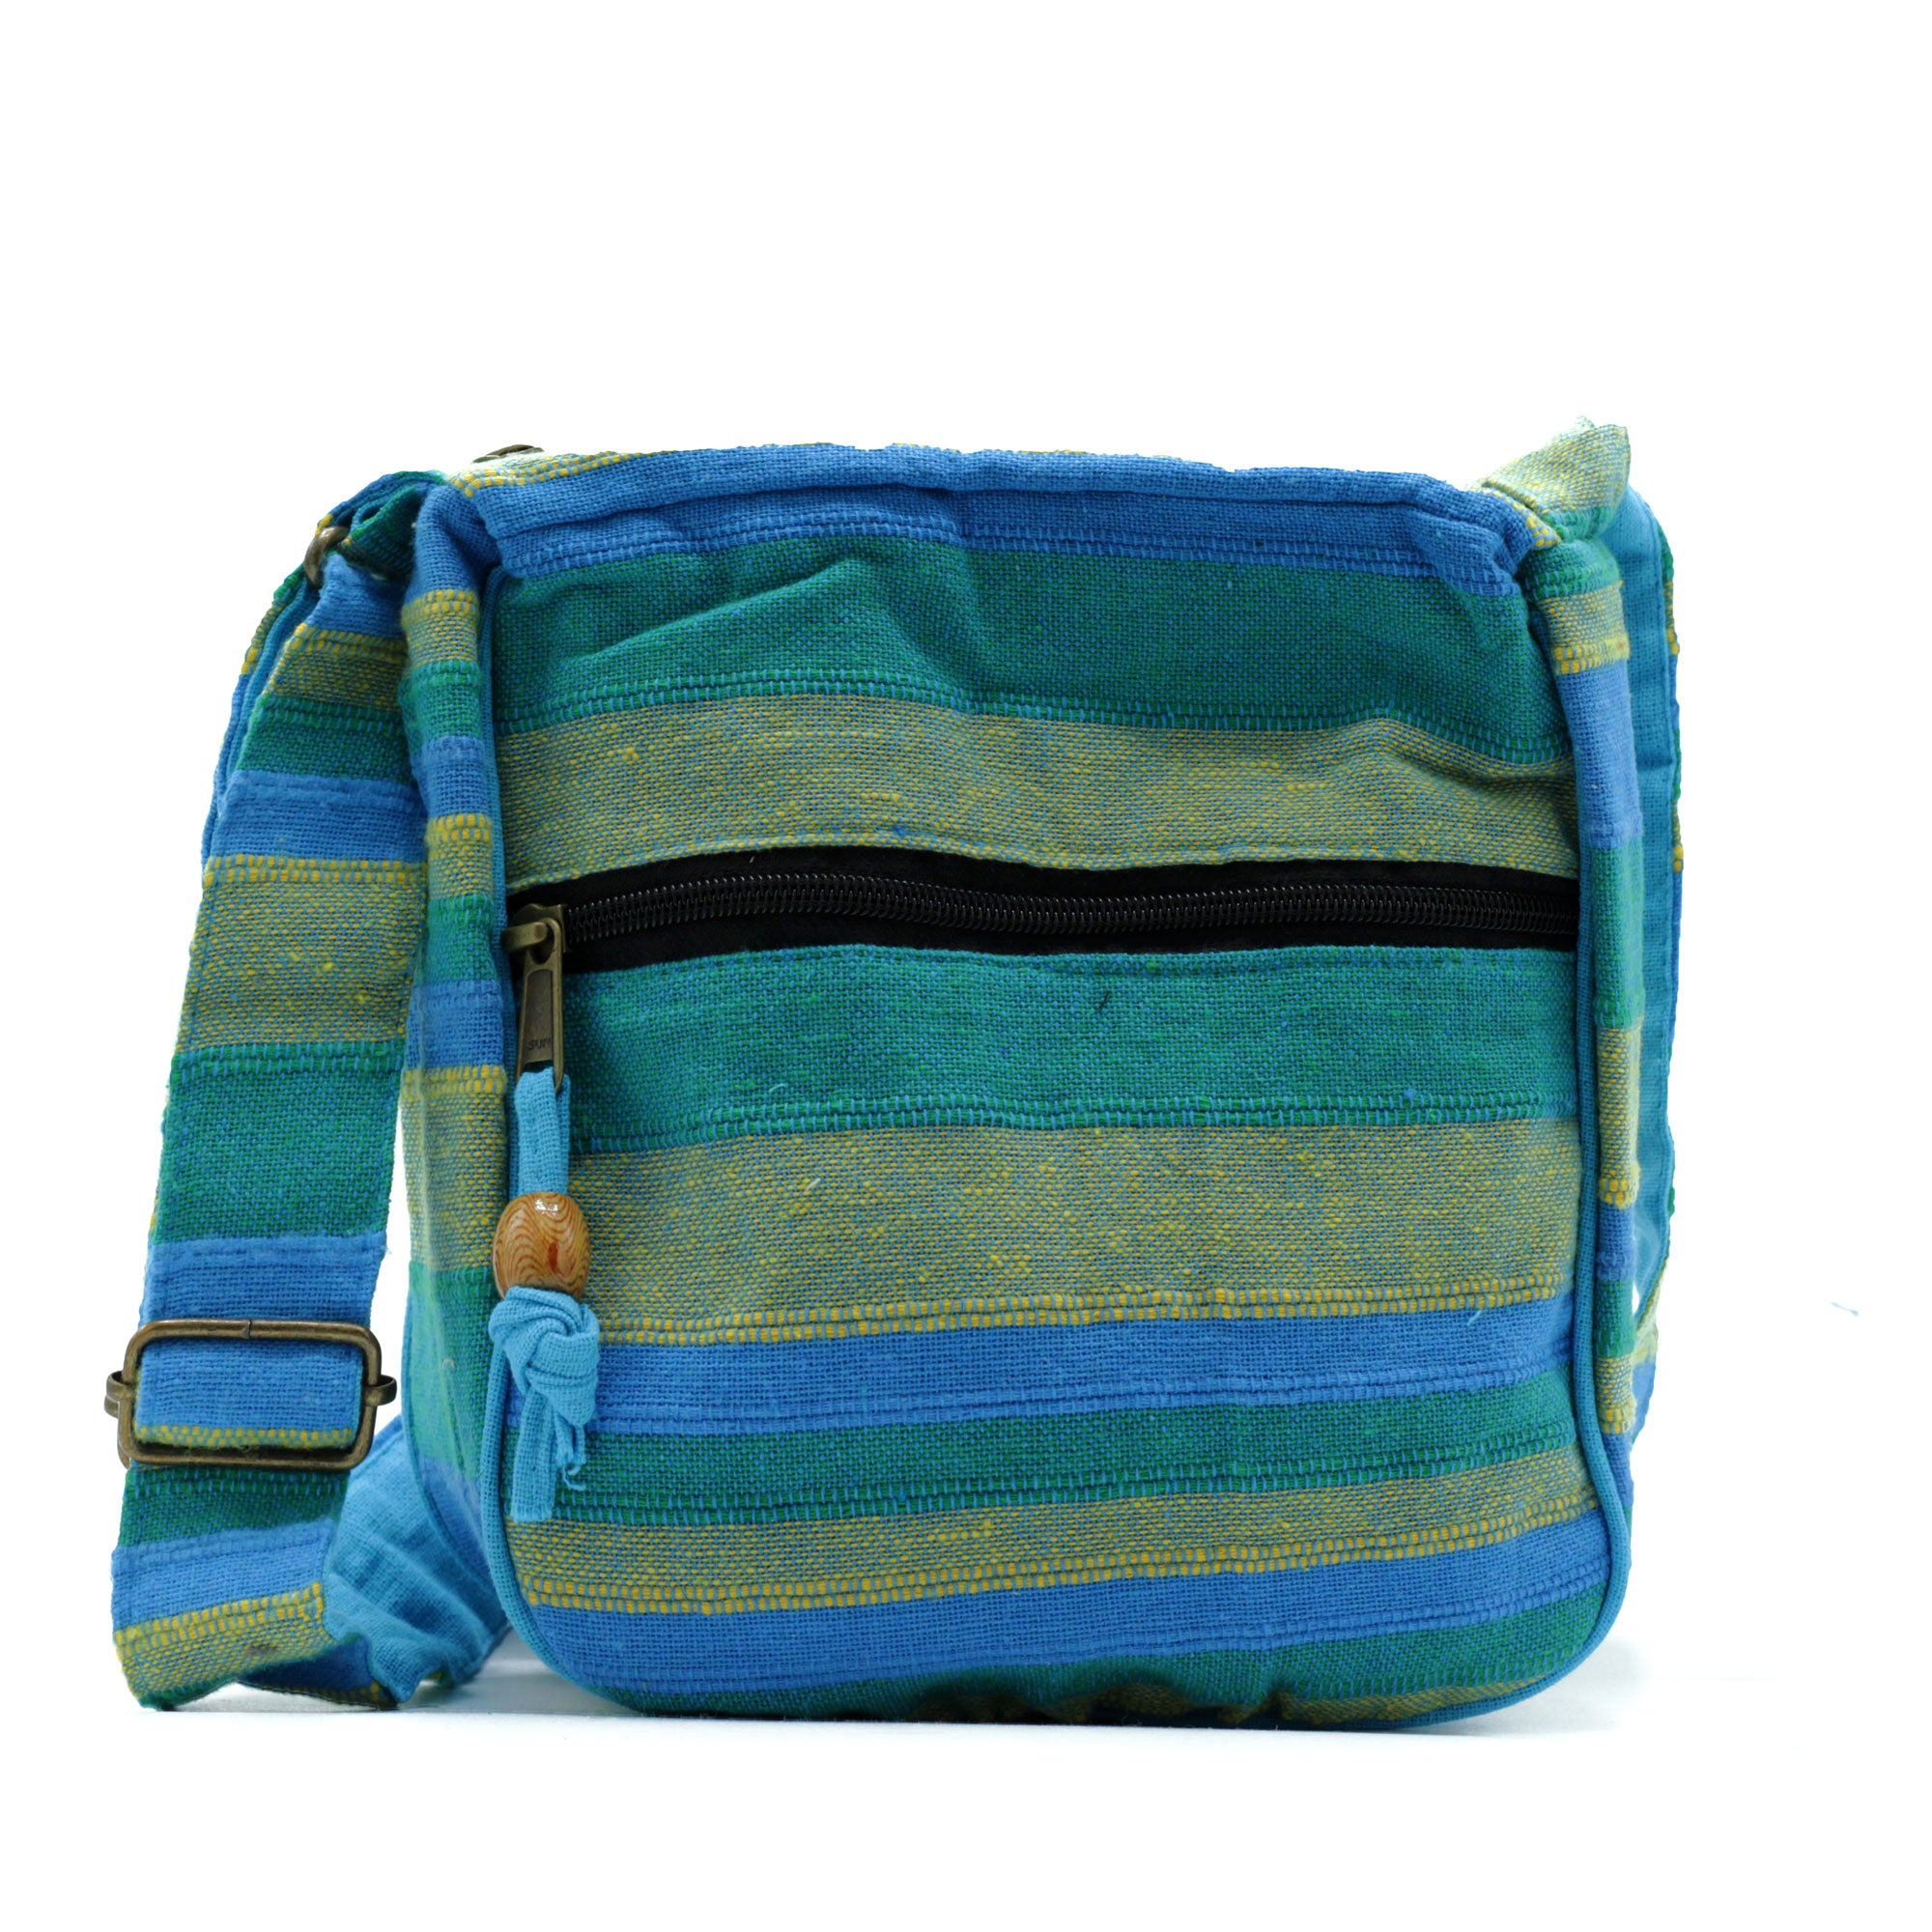 View Lrg Nepal Sling Bag Adjustable Strap Spring Meadows Green Blue information